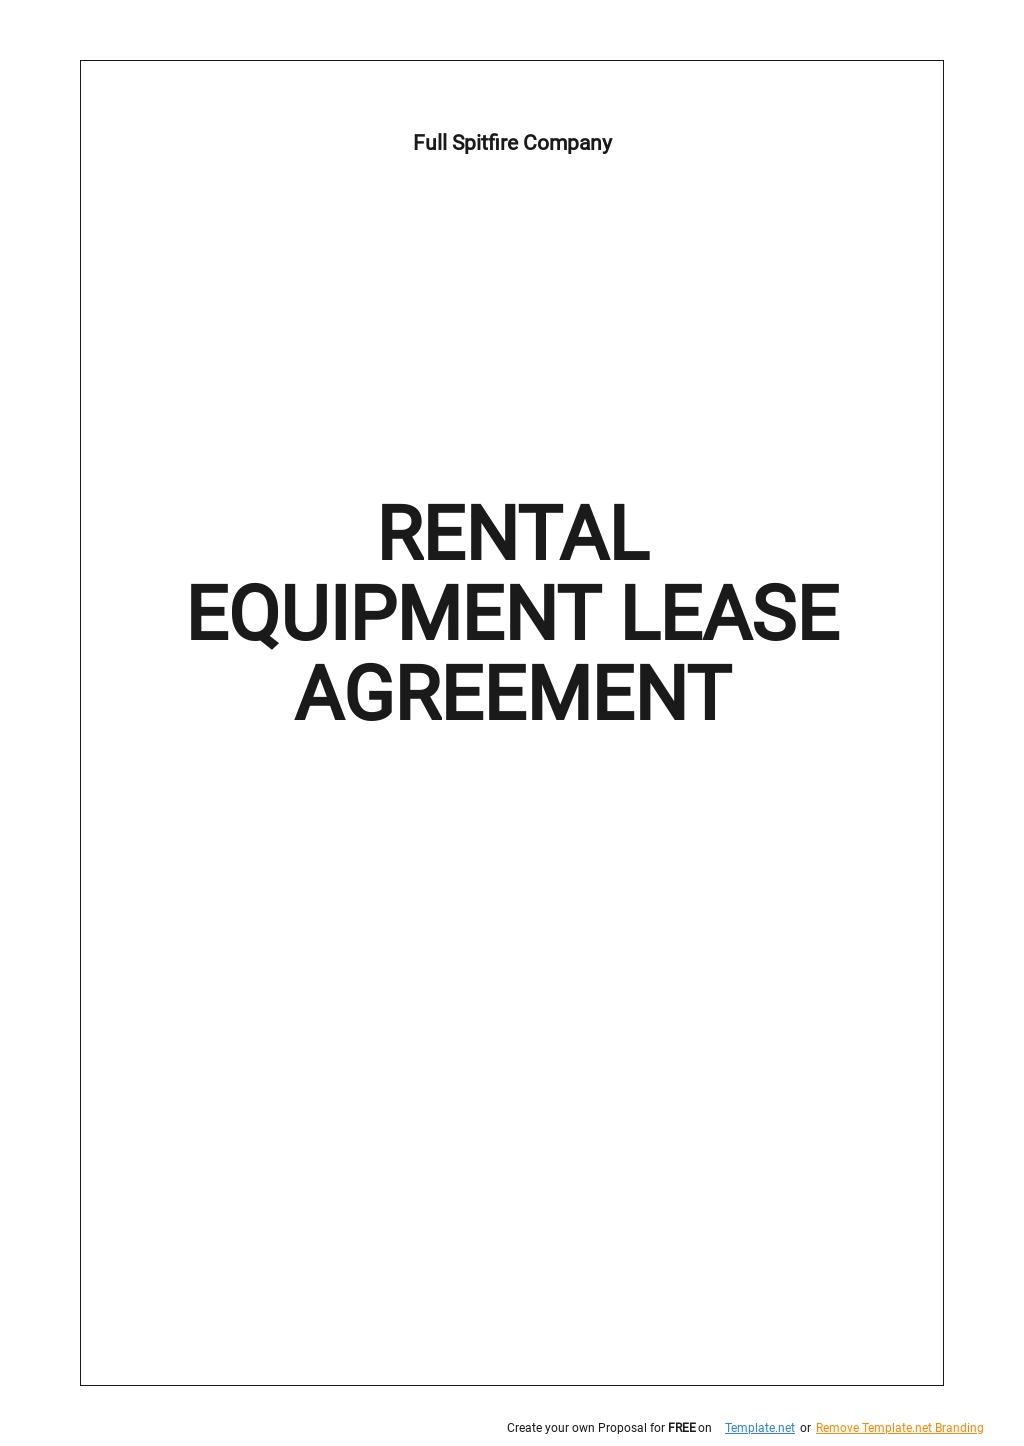 Rental Equipment Lease Agreement Template Google Docs, Word, Apple